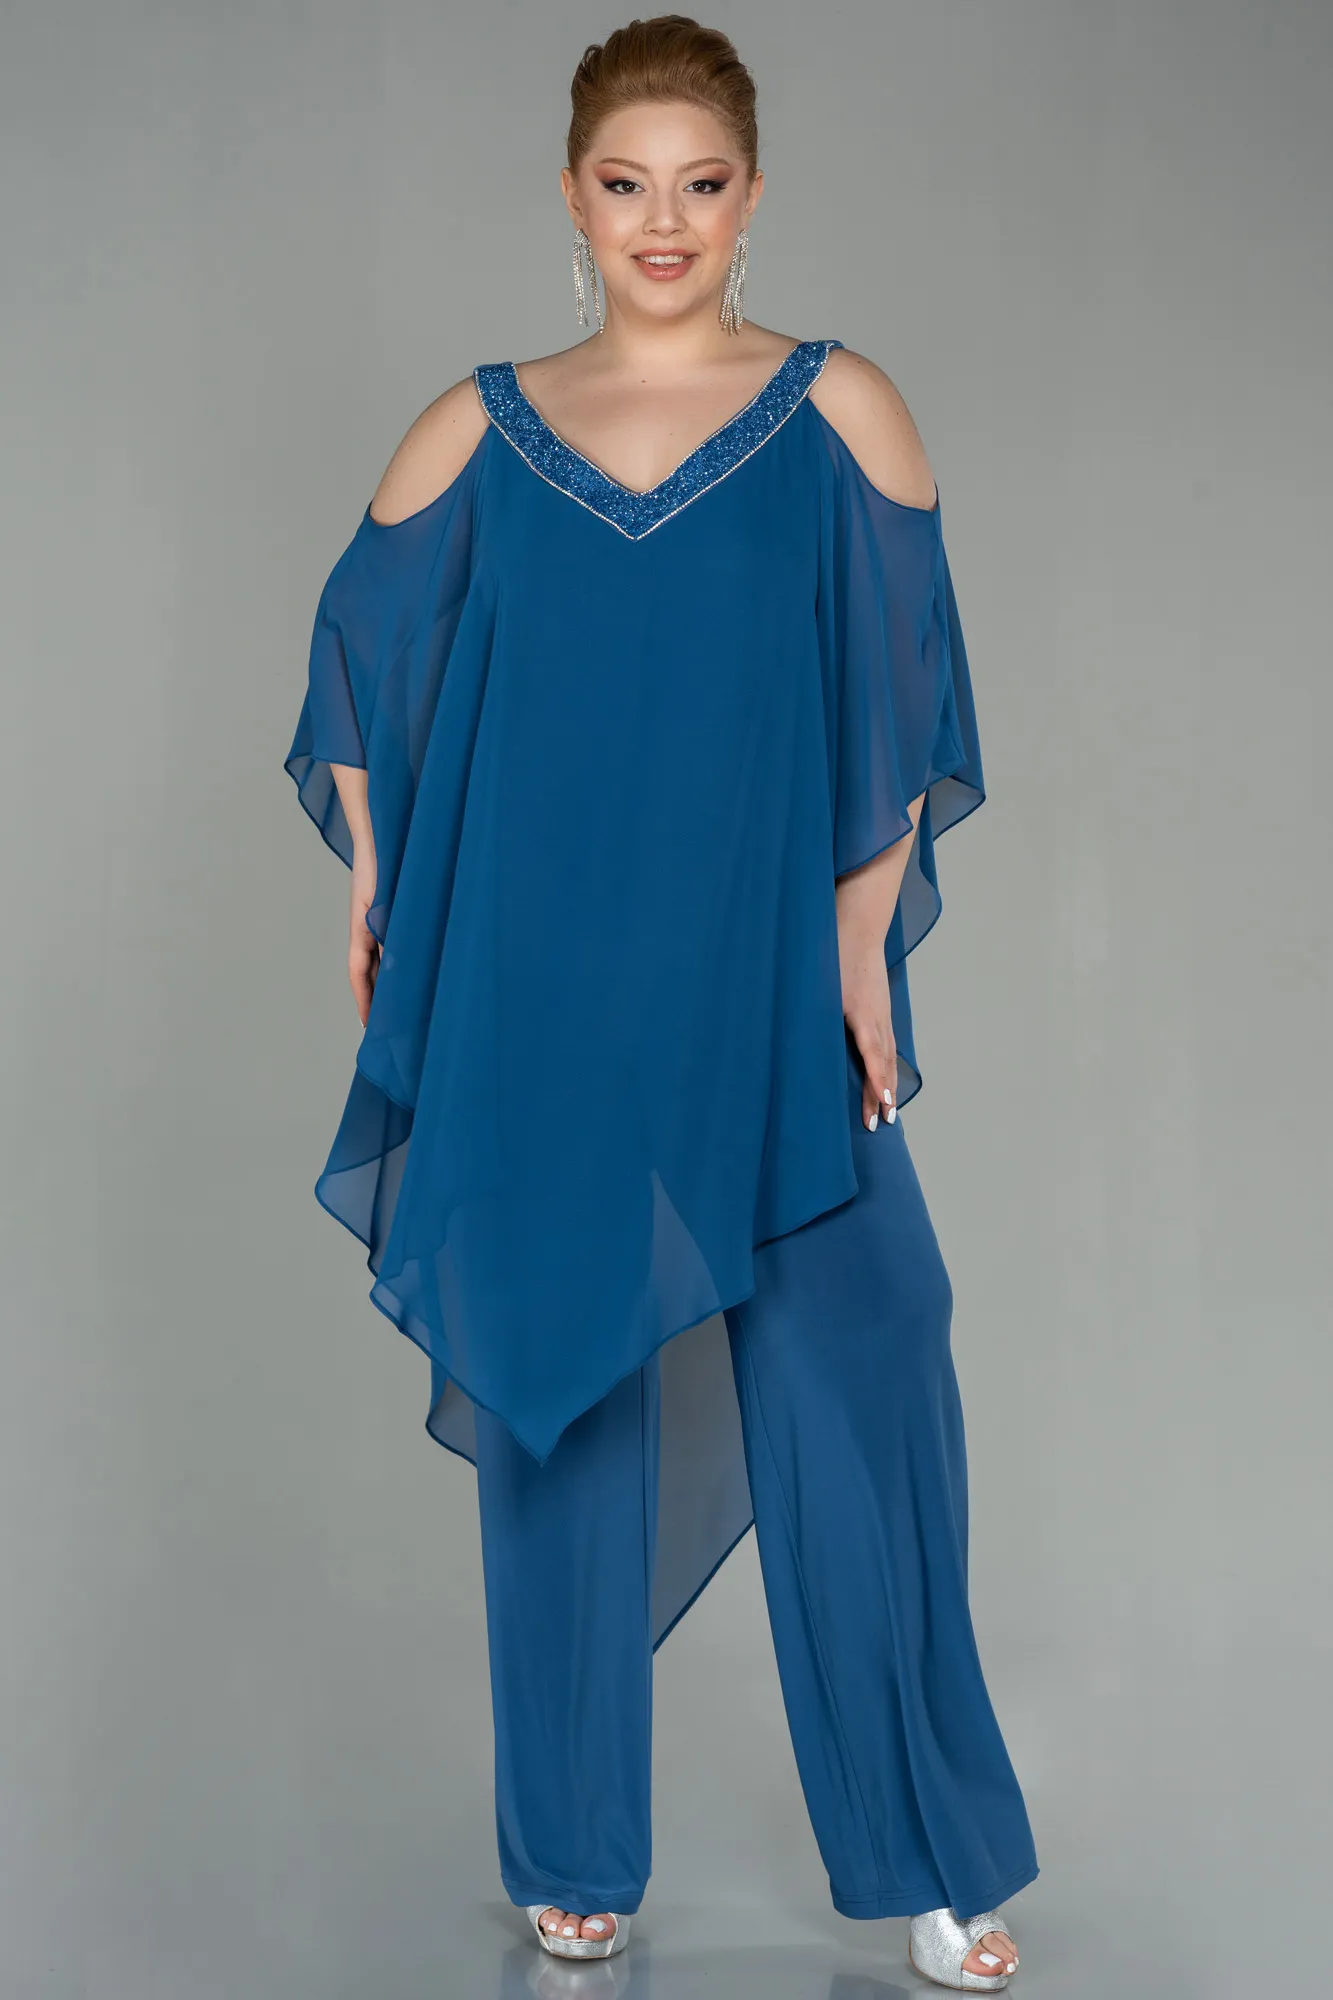 Indigo-Chiffon Plus Size Evening Dress ABT096